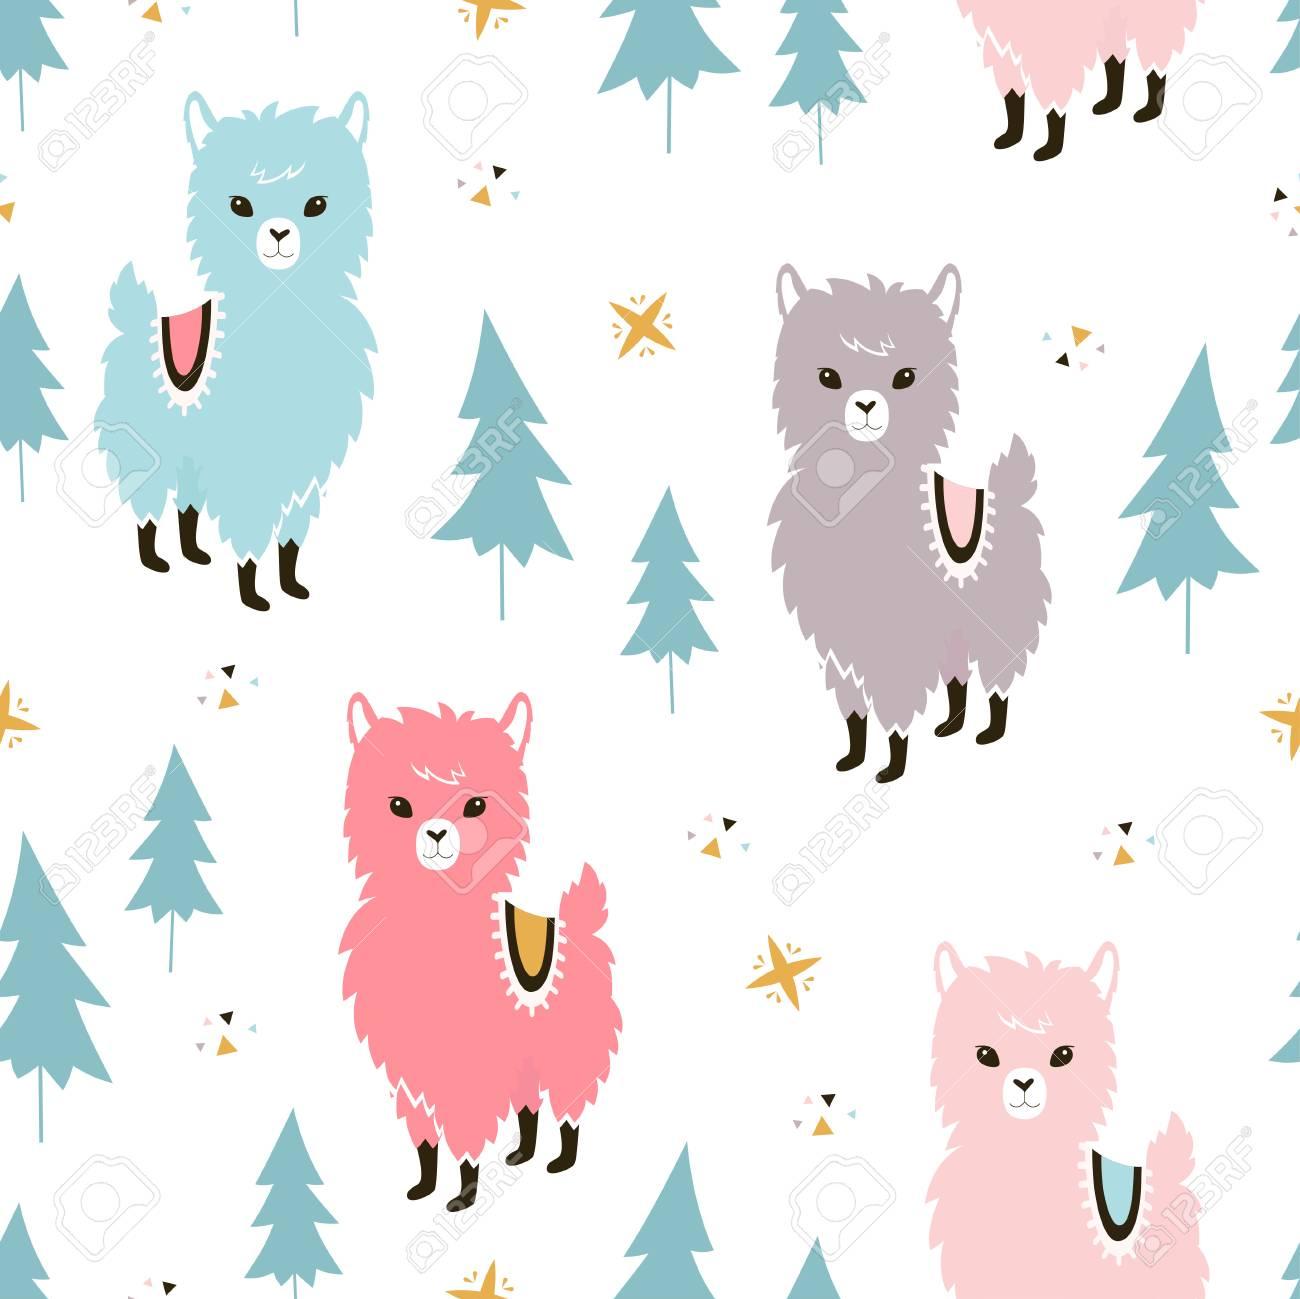 Christmas Llamas Seamless Pattern Winter Holidays Greeting Card